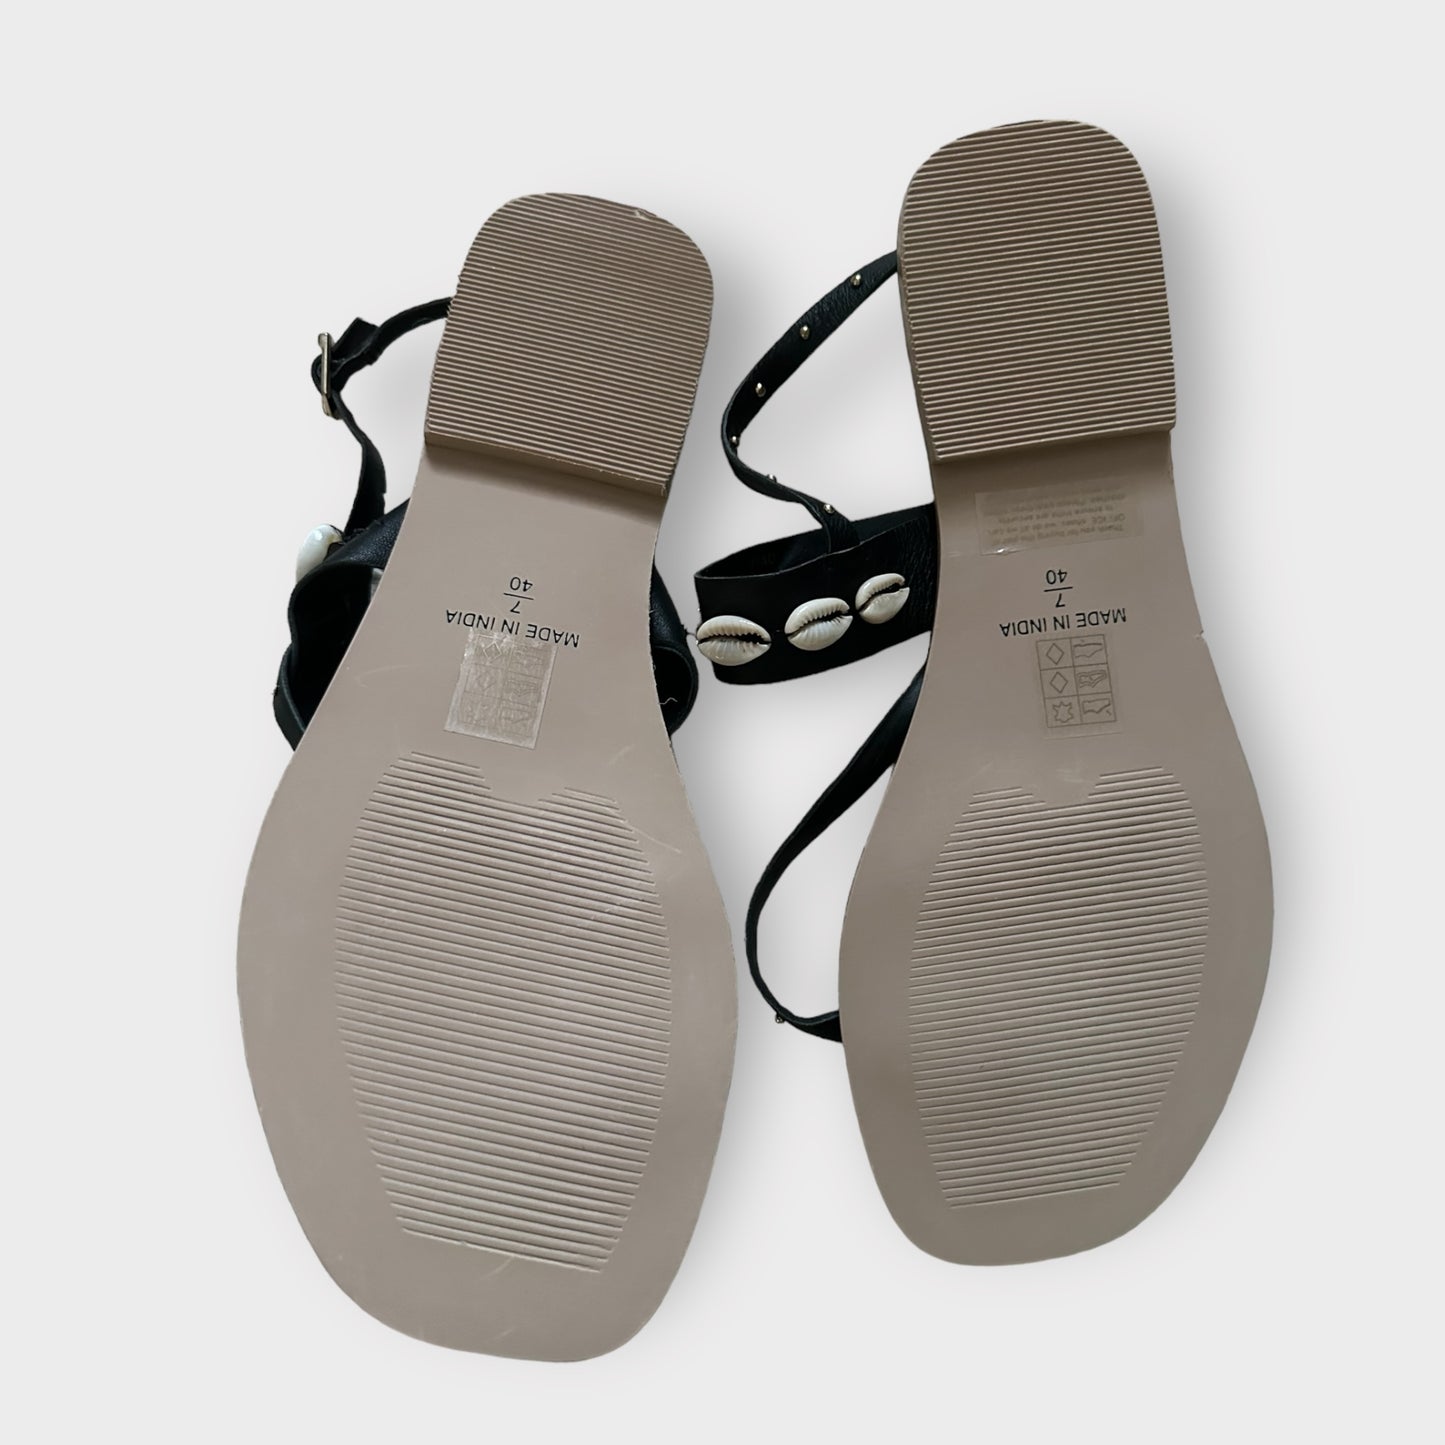 Office black hippy shell sandals flip flops leather shoes EU 40 UK 7 new bnwob